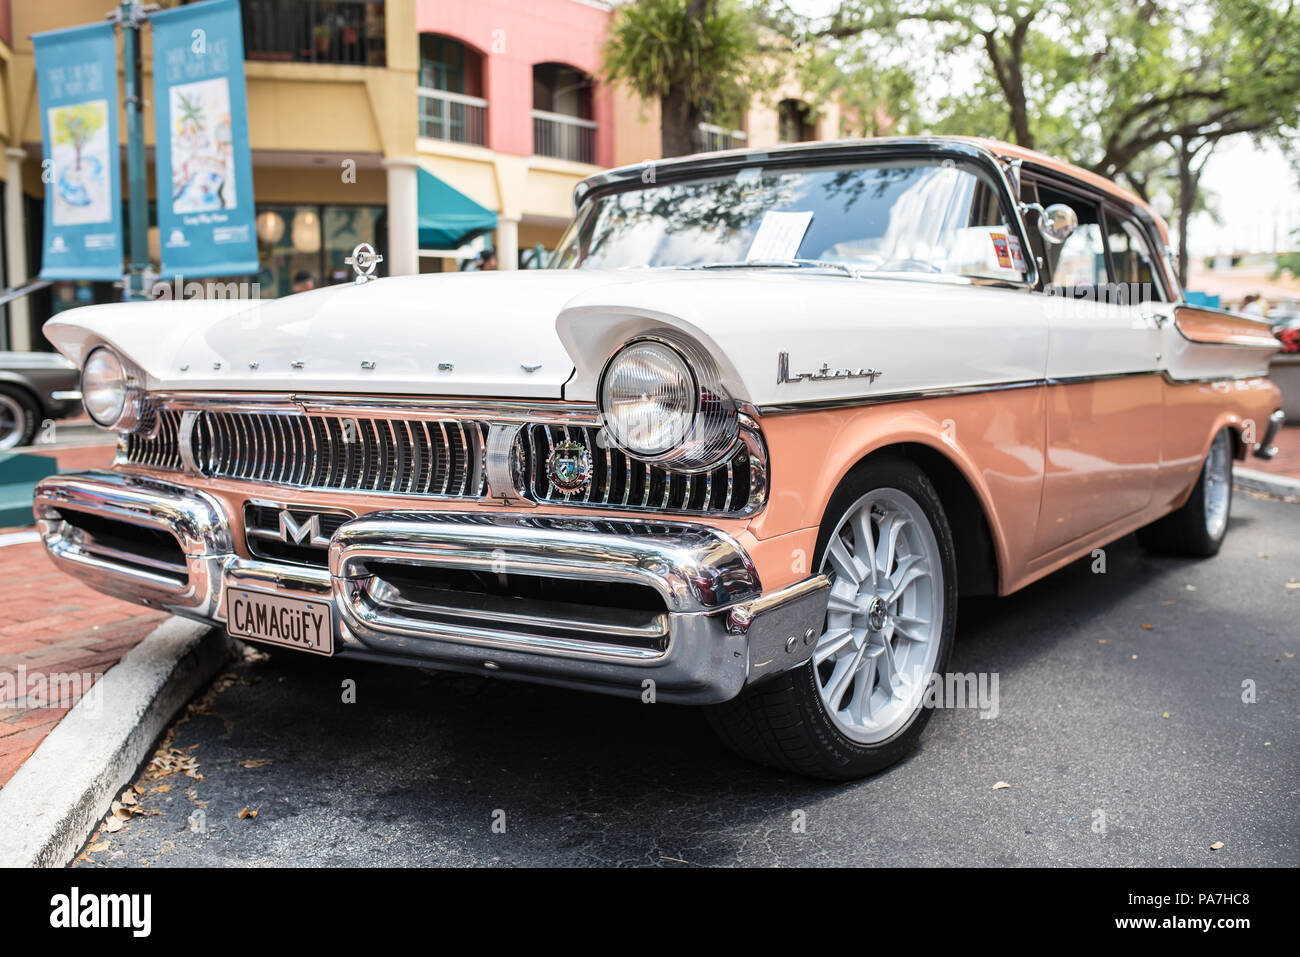 Mercury classic old car at a car show Stock Photo - Alamy